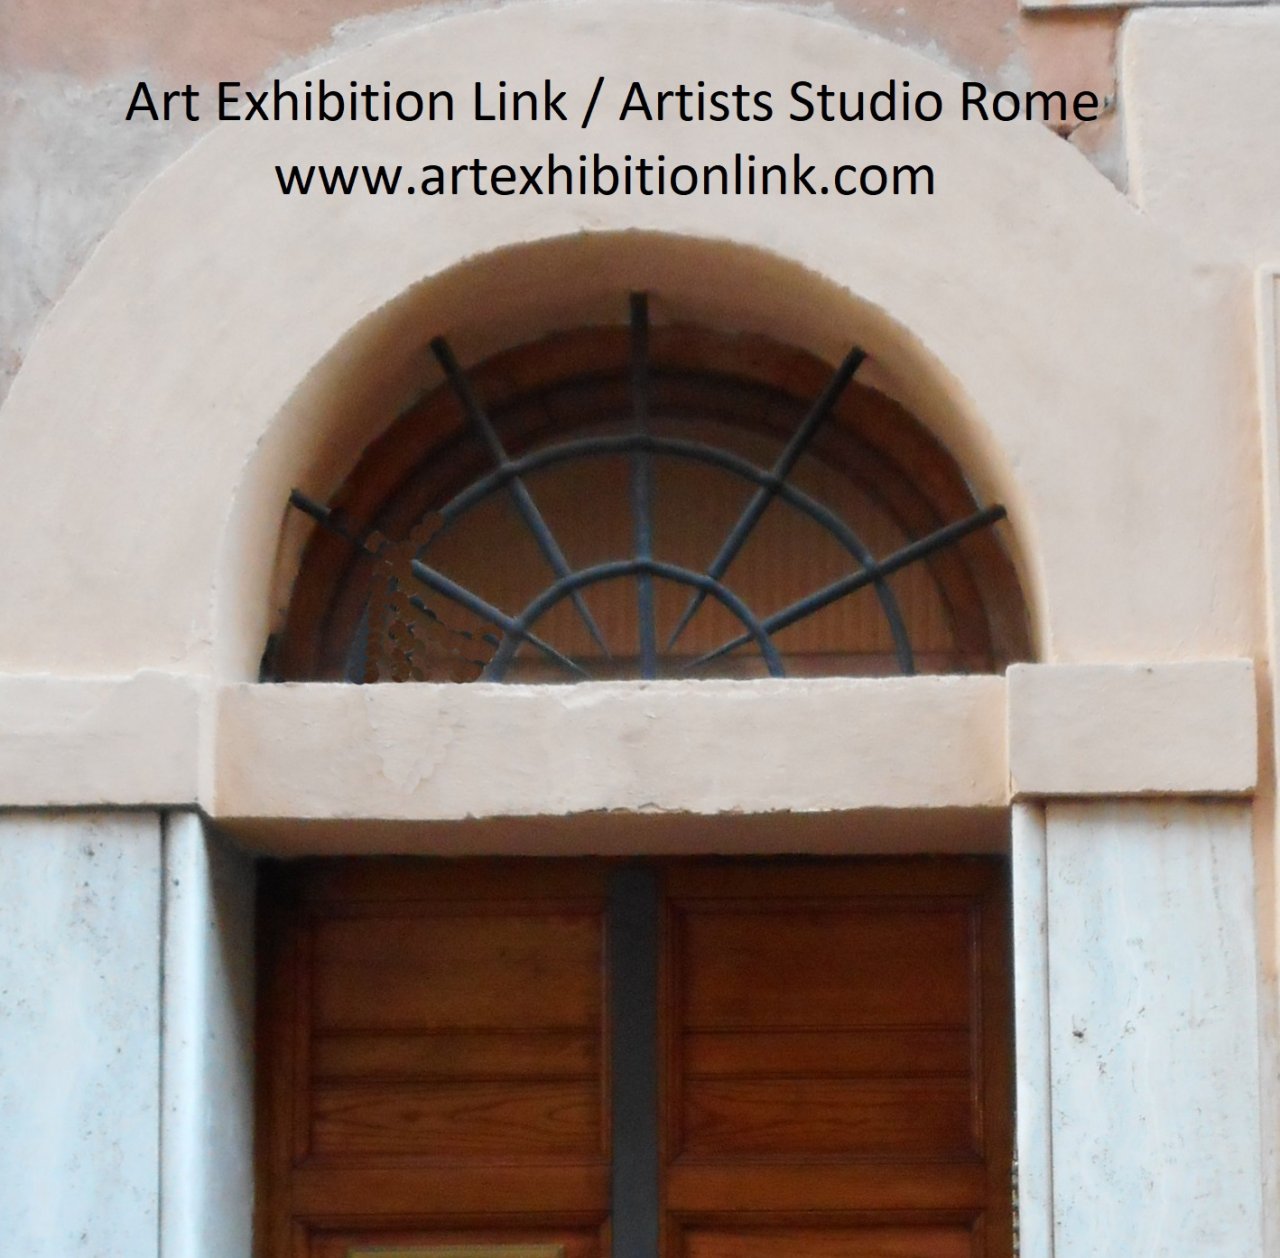 Art Exhibition Link / Artists Studio Roma